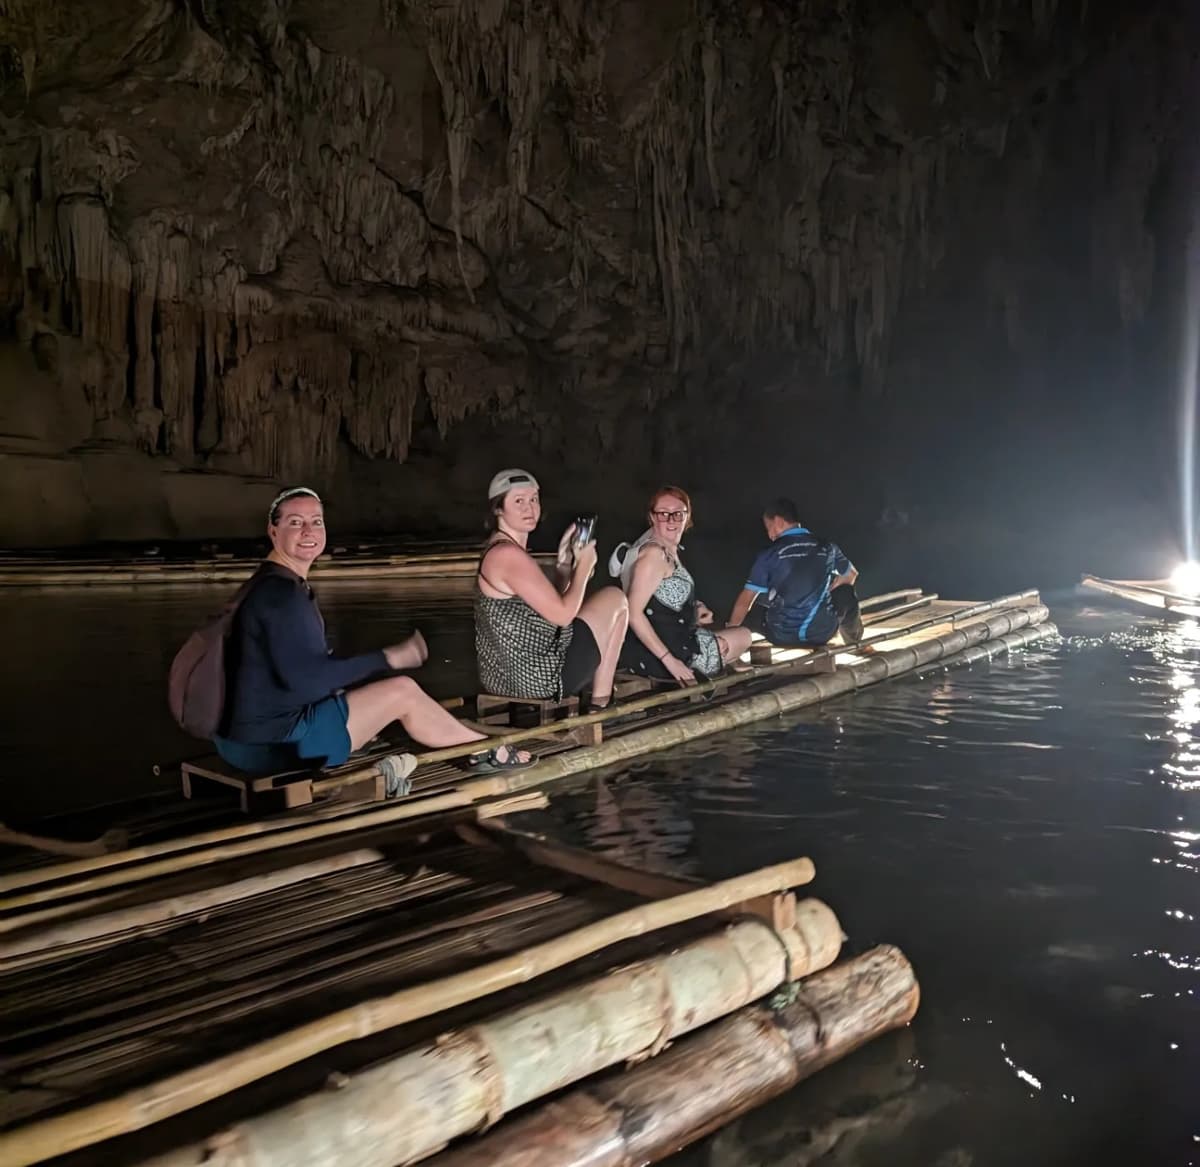 tham-lod-cave-in-pai-8-essential-thailand-tour-17-days.jpeg